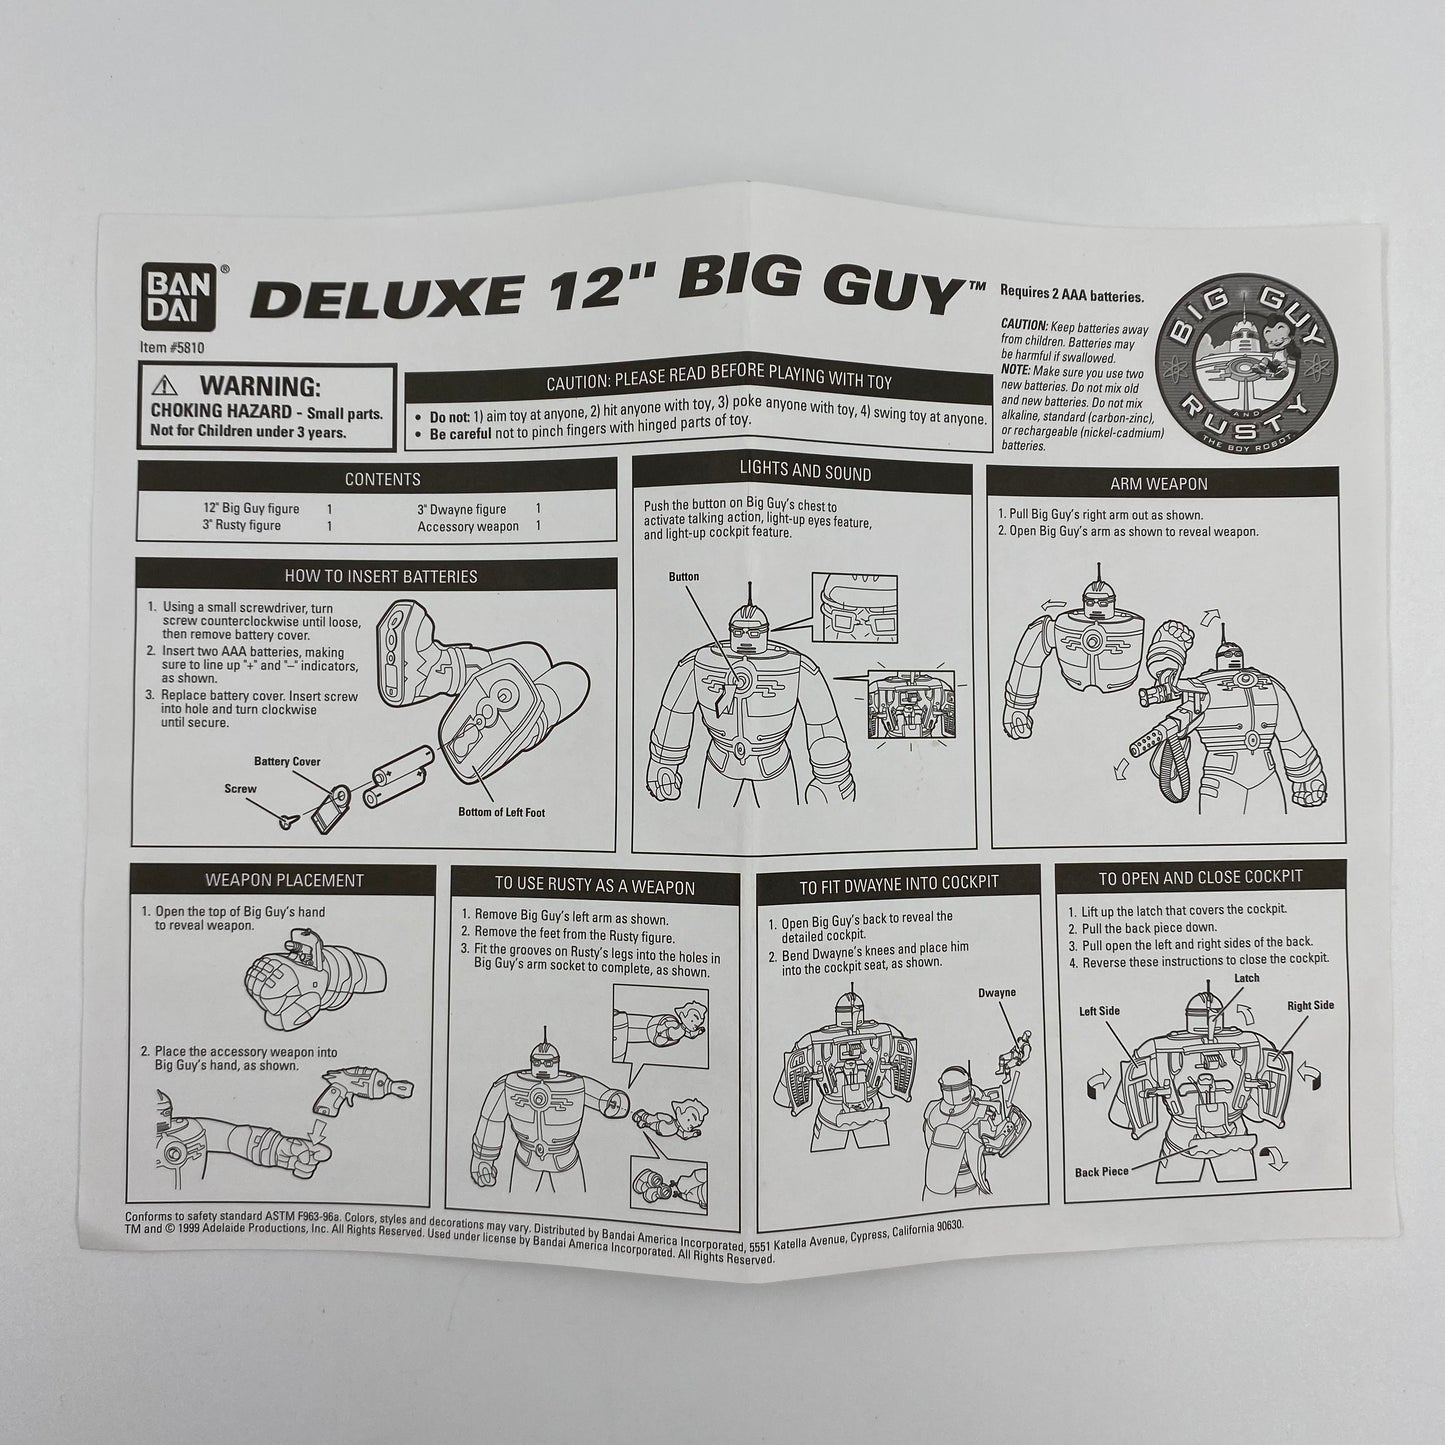 Big Guy and Rusty the Boy Robot Deluxe Big Guy boxed action figure set (1999) Bandai